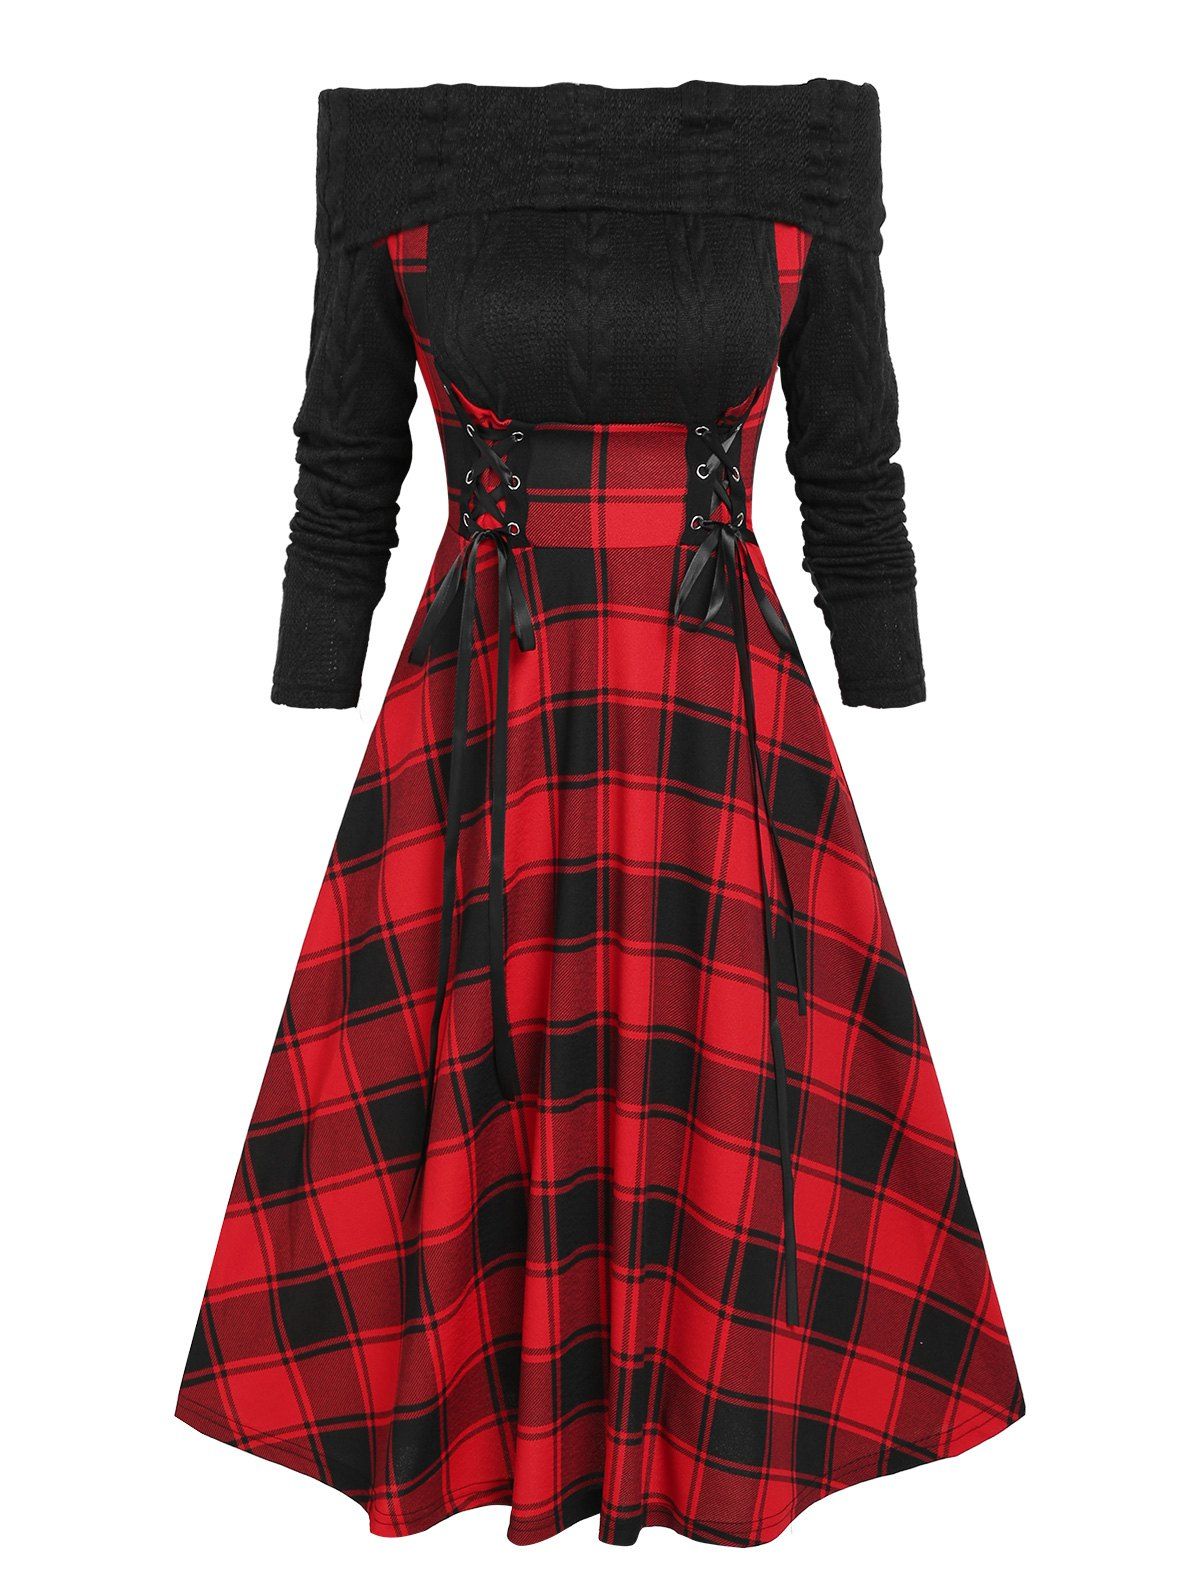 Vintage Off Shoulder Plaid Lace Up 2 In 1 Dress - RED XXXXL